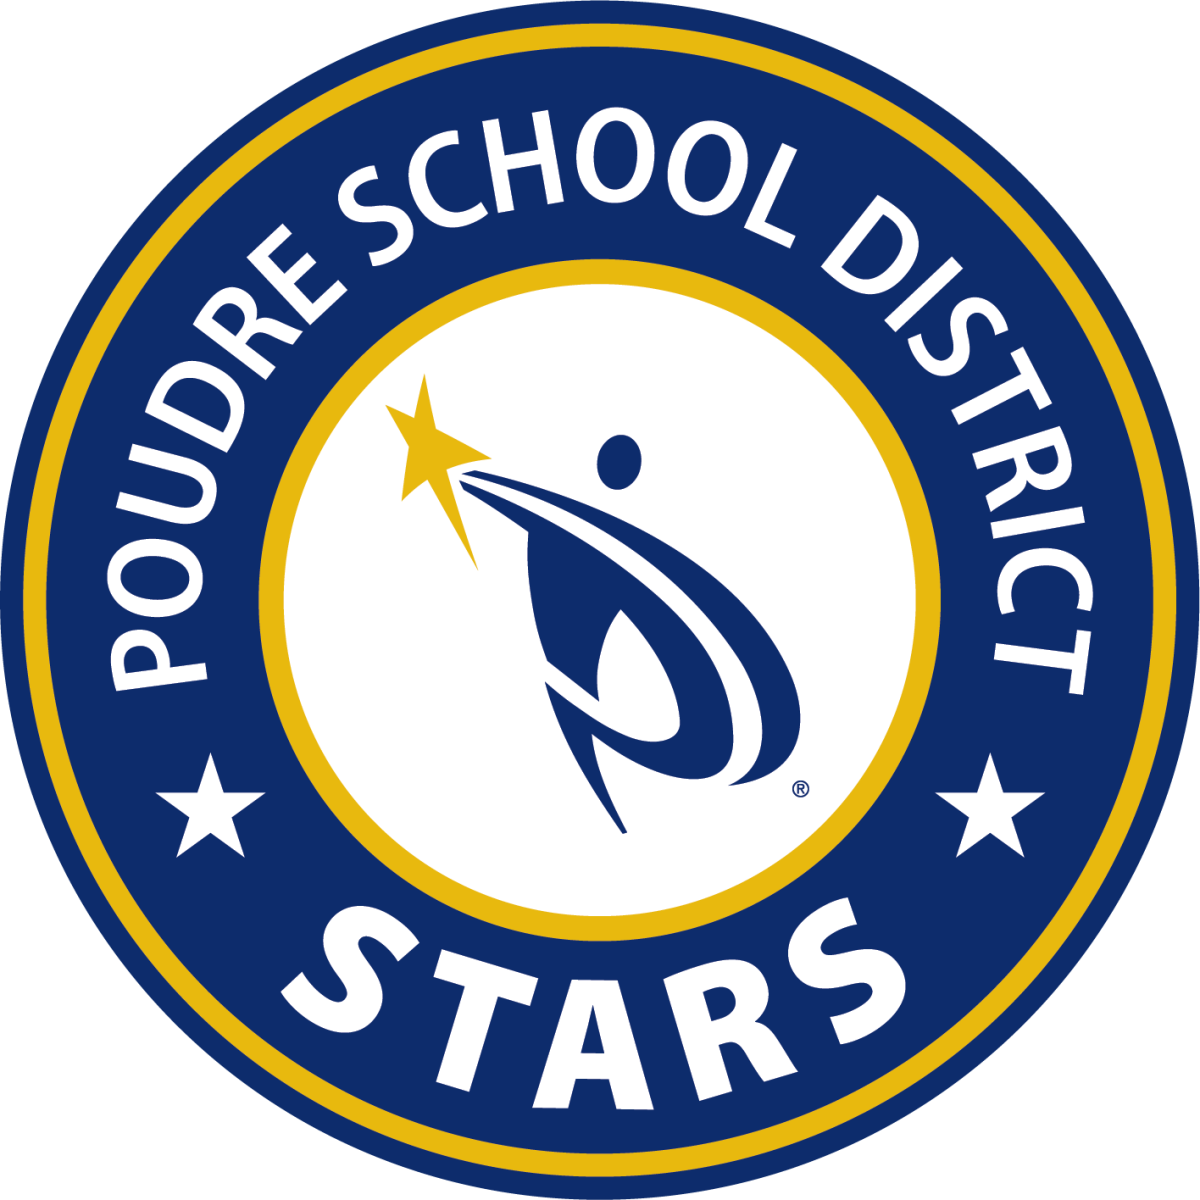 poudre-school-district-rebranding-districtwide-sports-programs-as-psd-stars